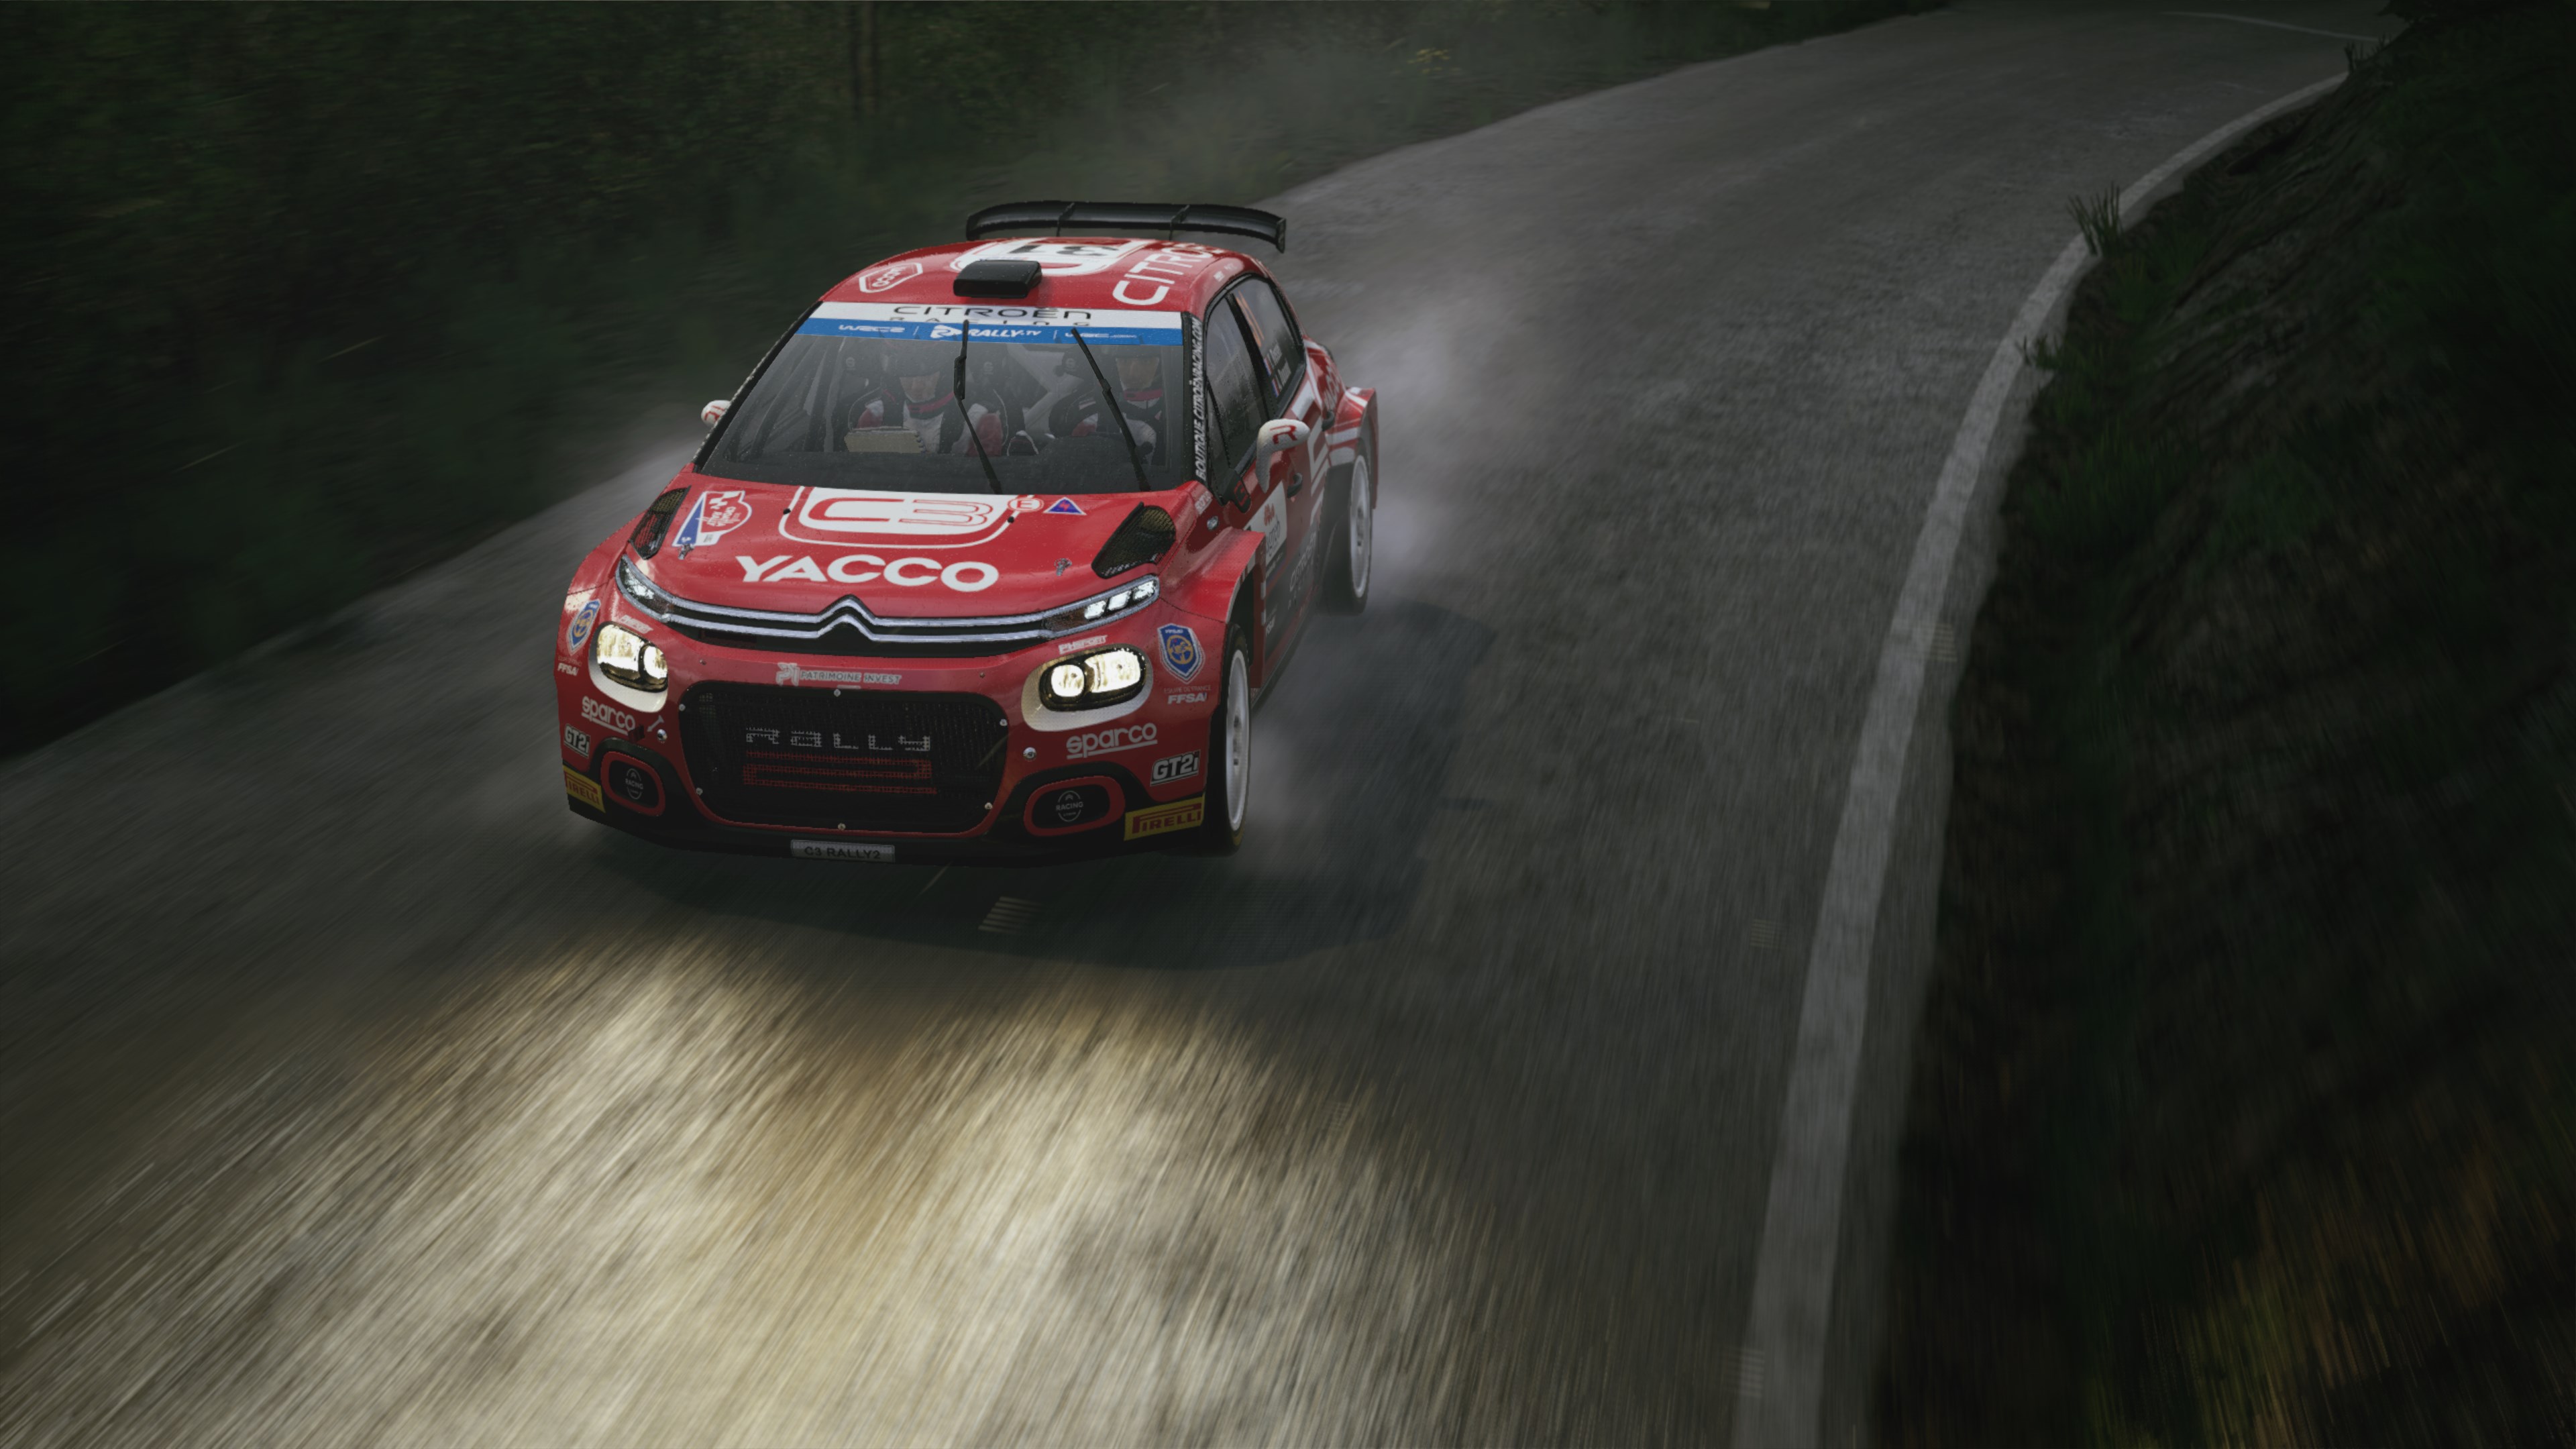 EA Sports WRC 23 Steam Altergift